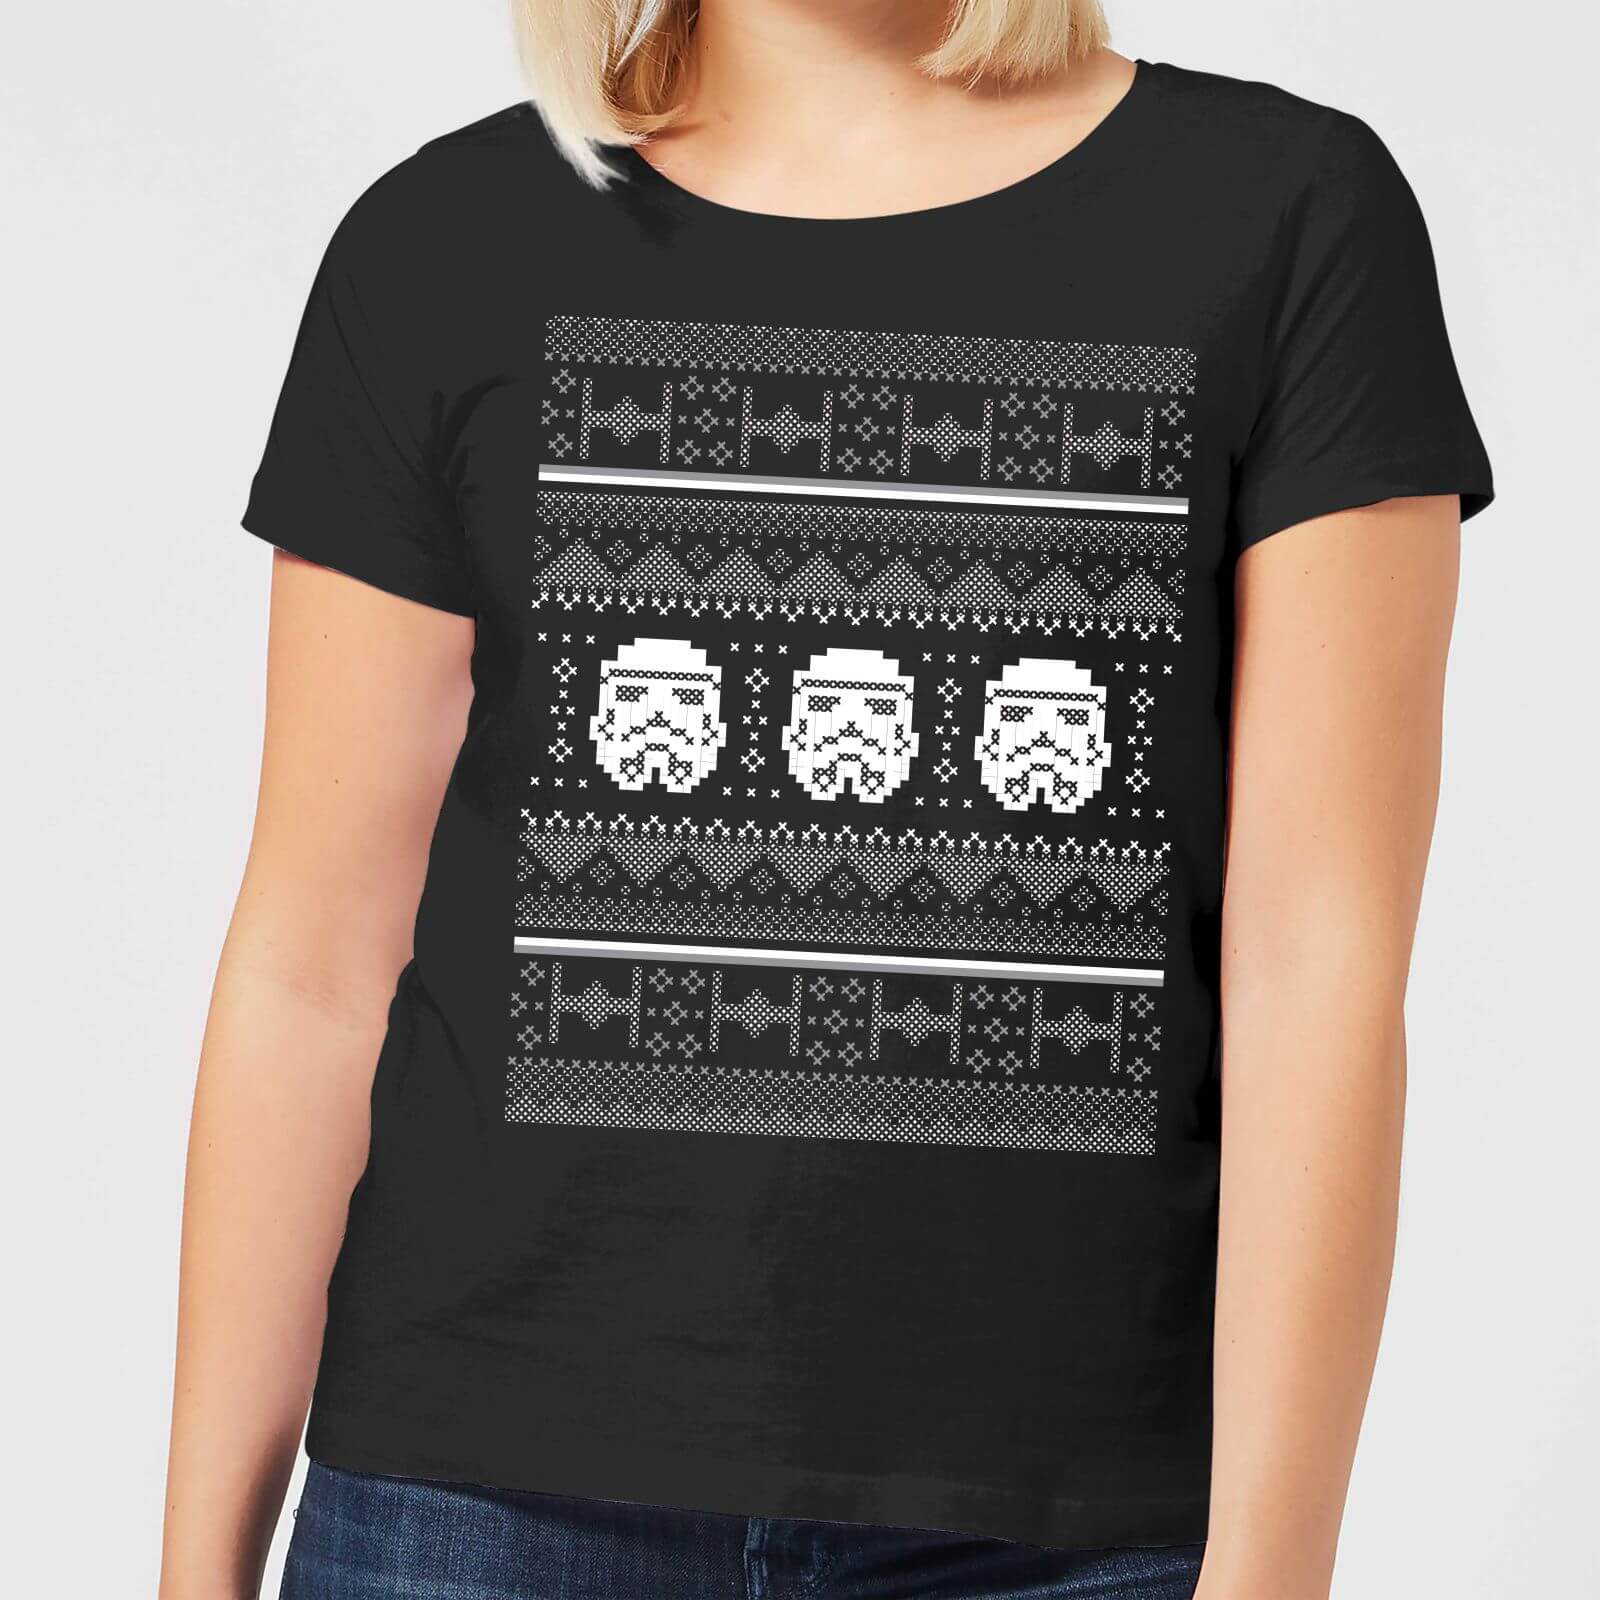 Star Wars Stormtrooper Knit Women's Christmas T-Shirt - Black - XXL - Black